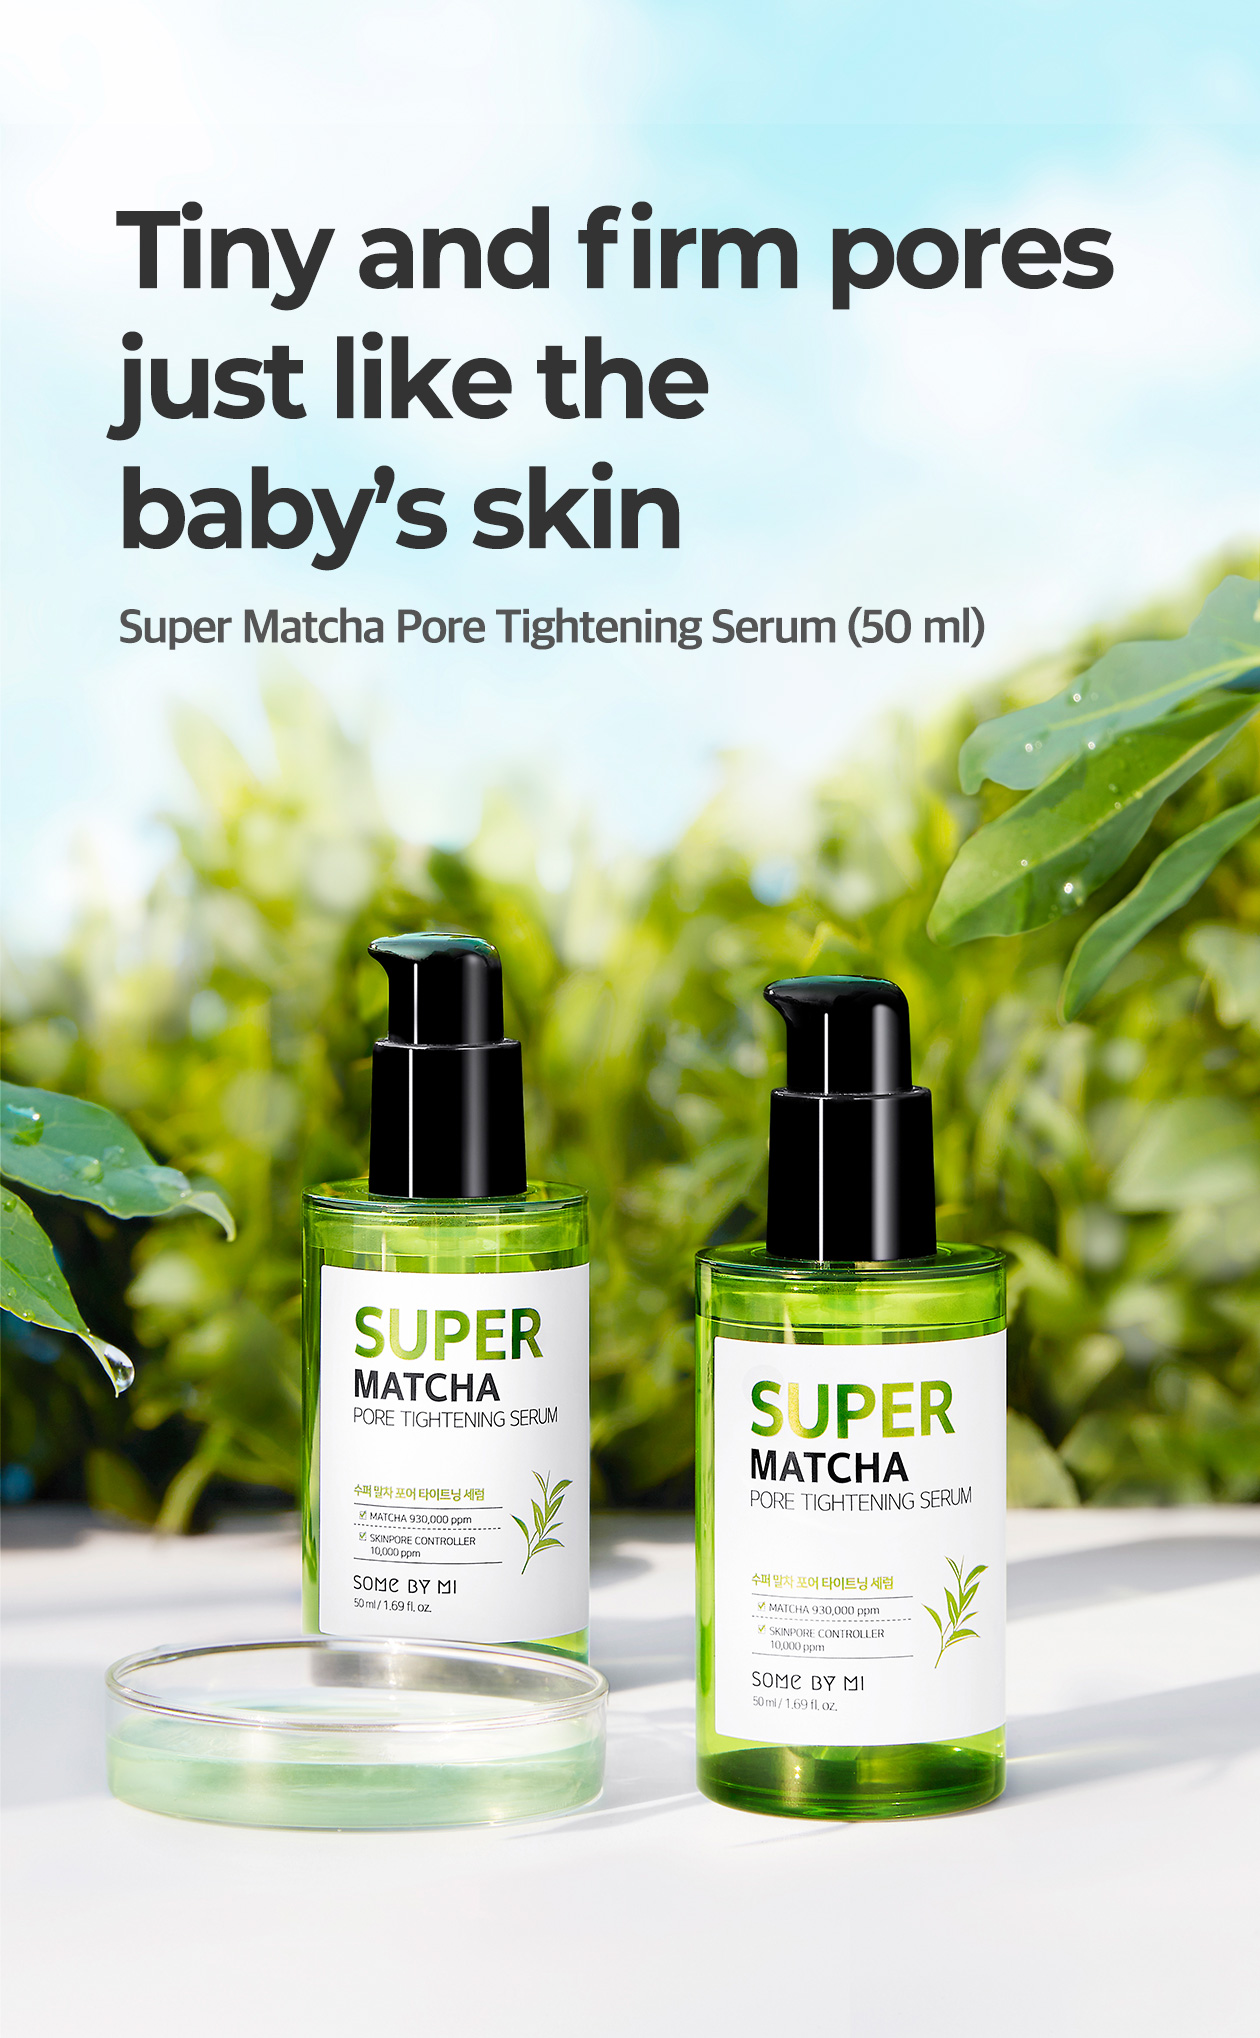 SOME BY MI - Super Matcha Pore Tightening Serum - 50ml